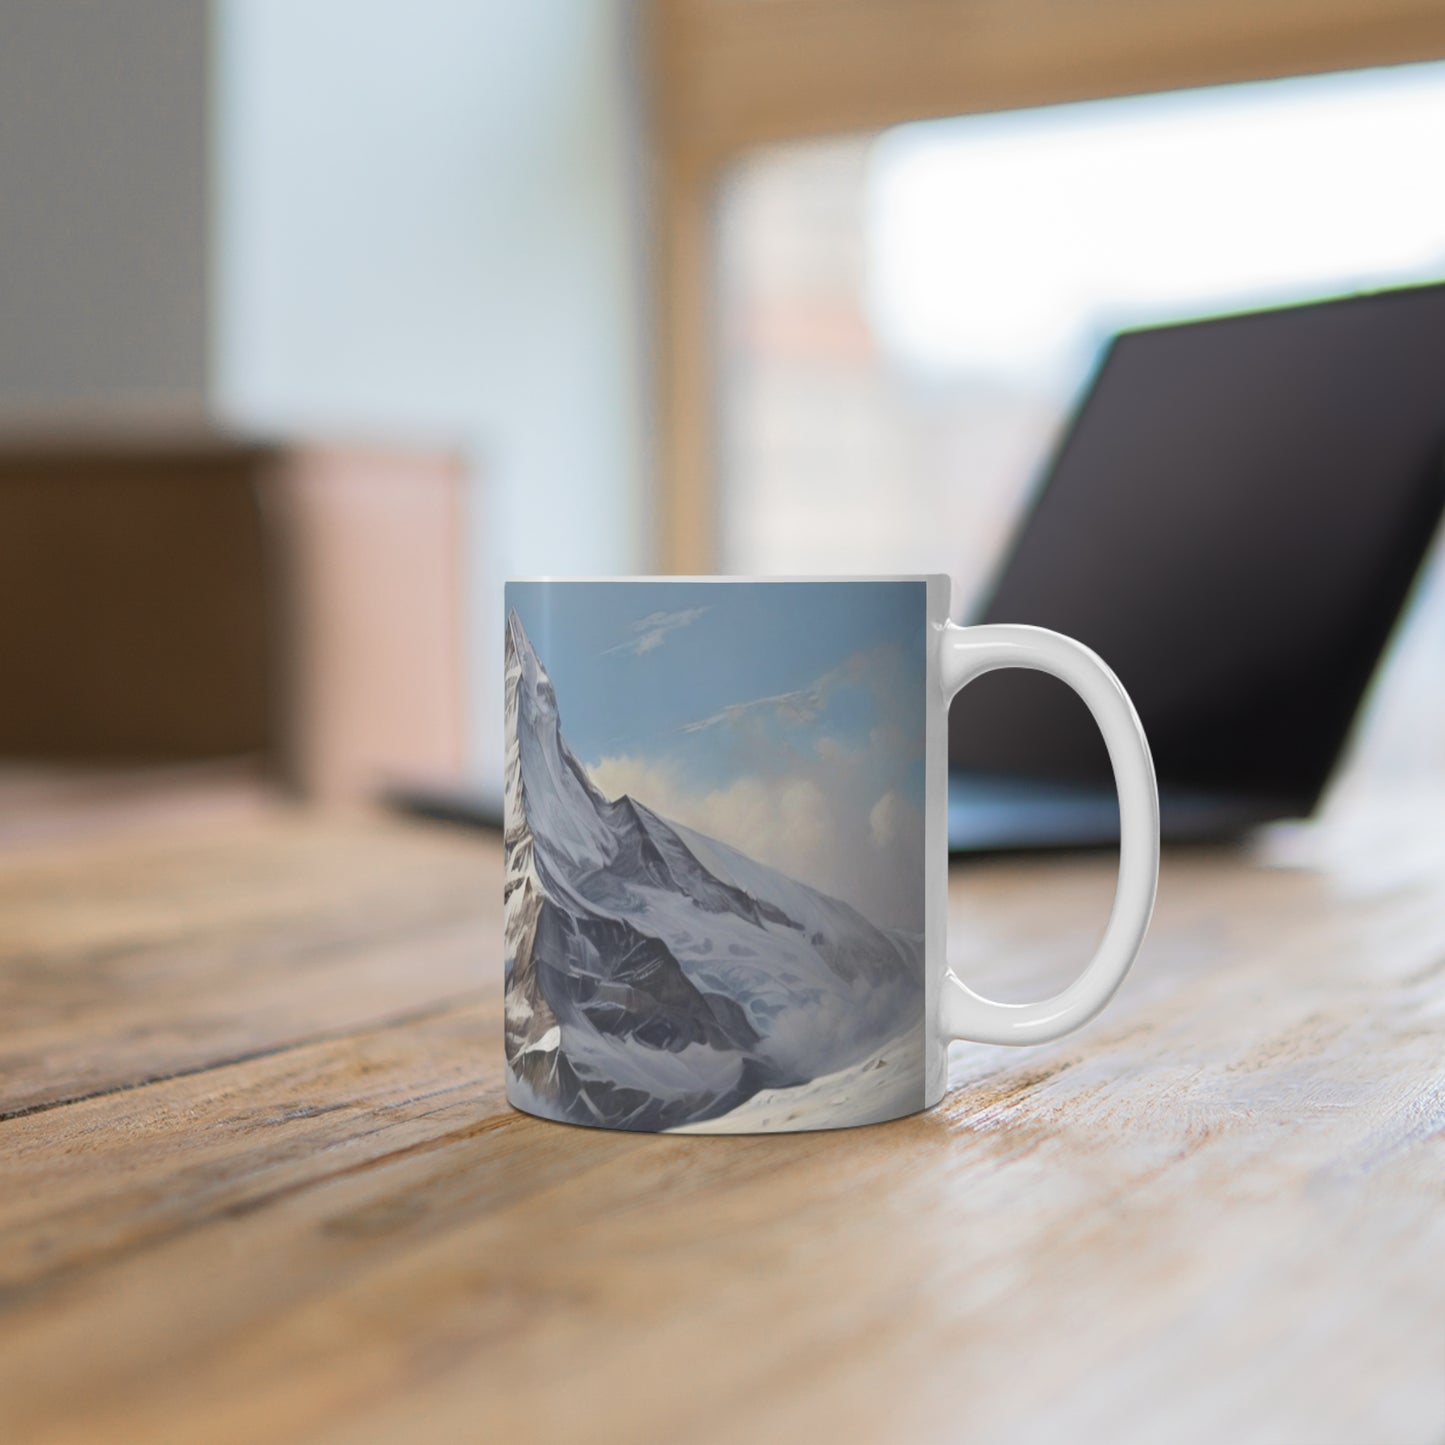 Matterhorn Mountain Artwork Mug - Ceramic Coffee Mug 11oz